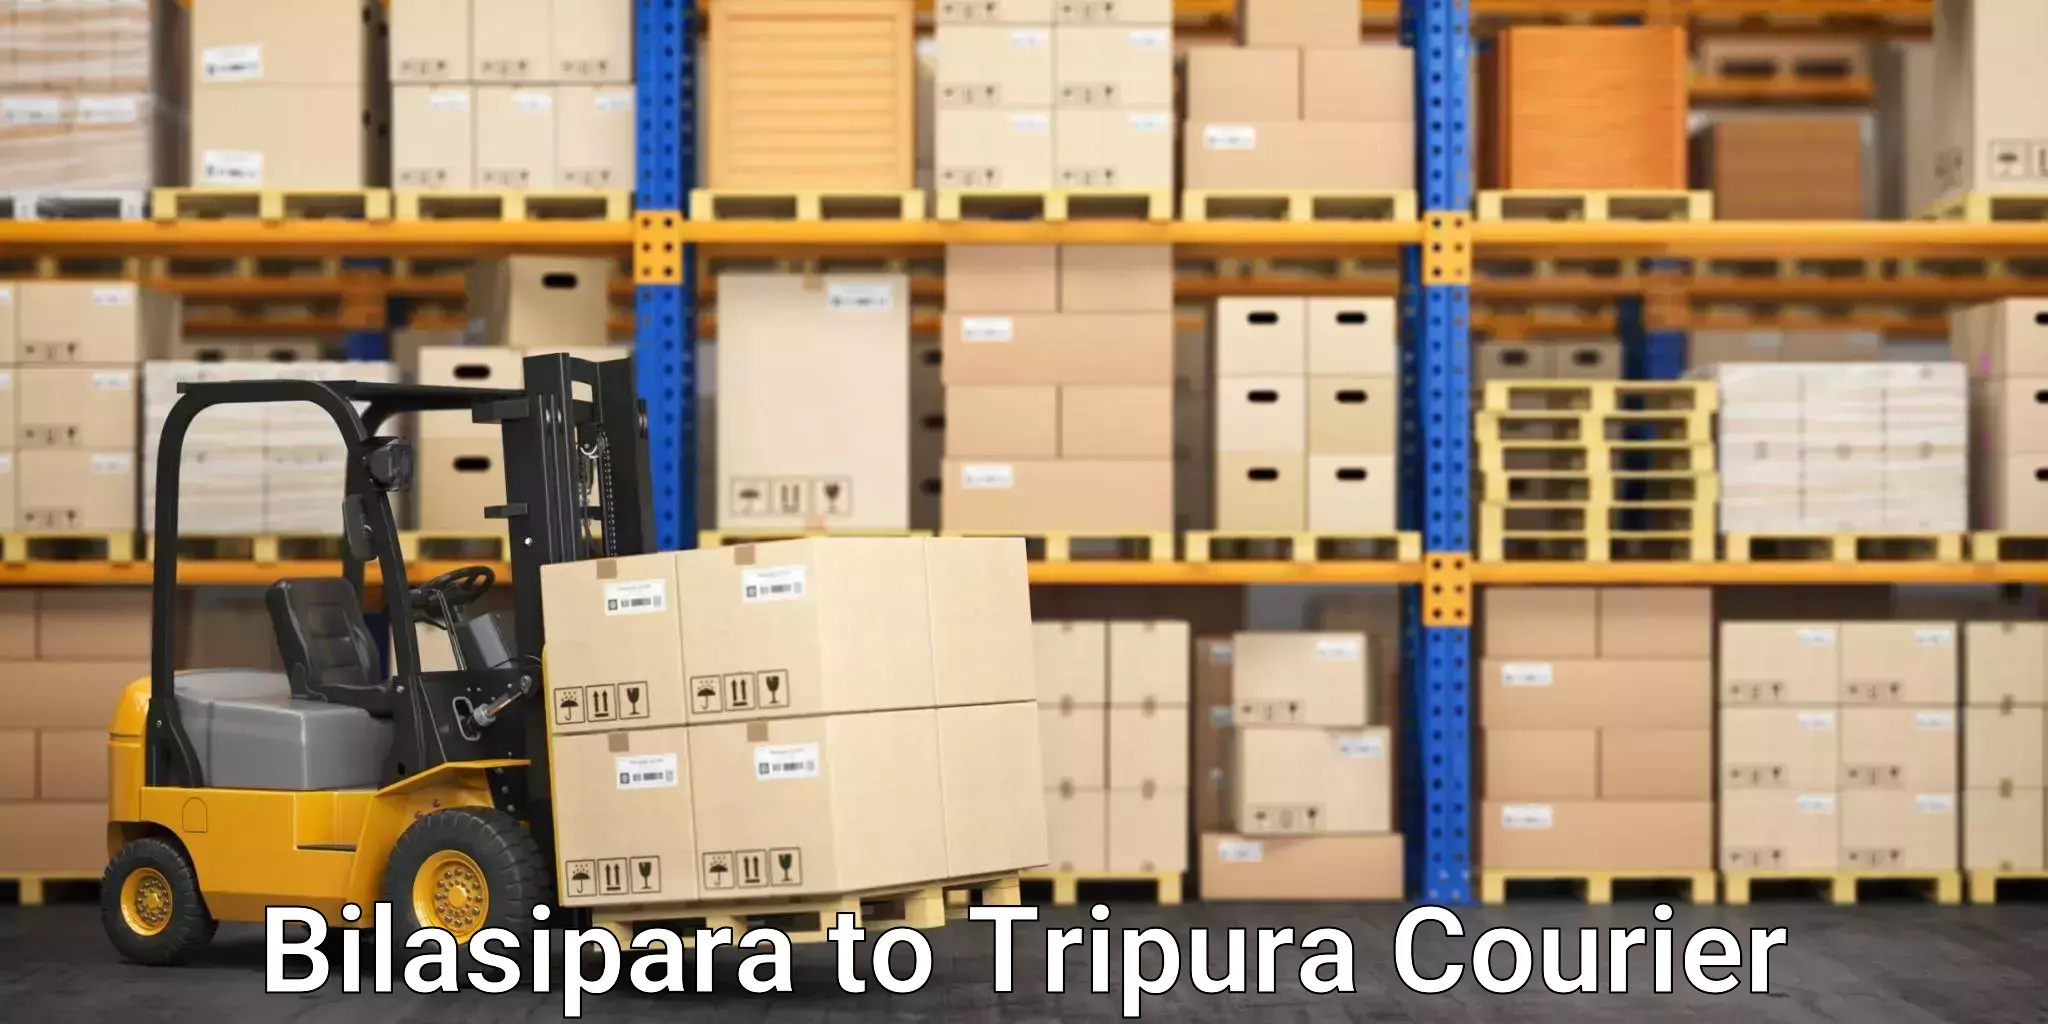 Rapid freight solutions in Bilasipara to Amarpur